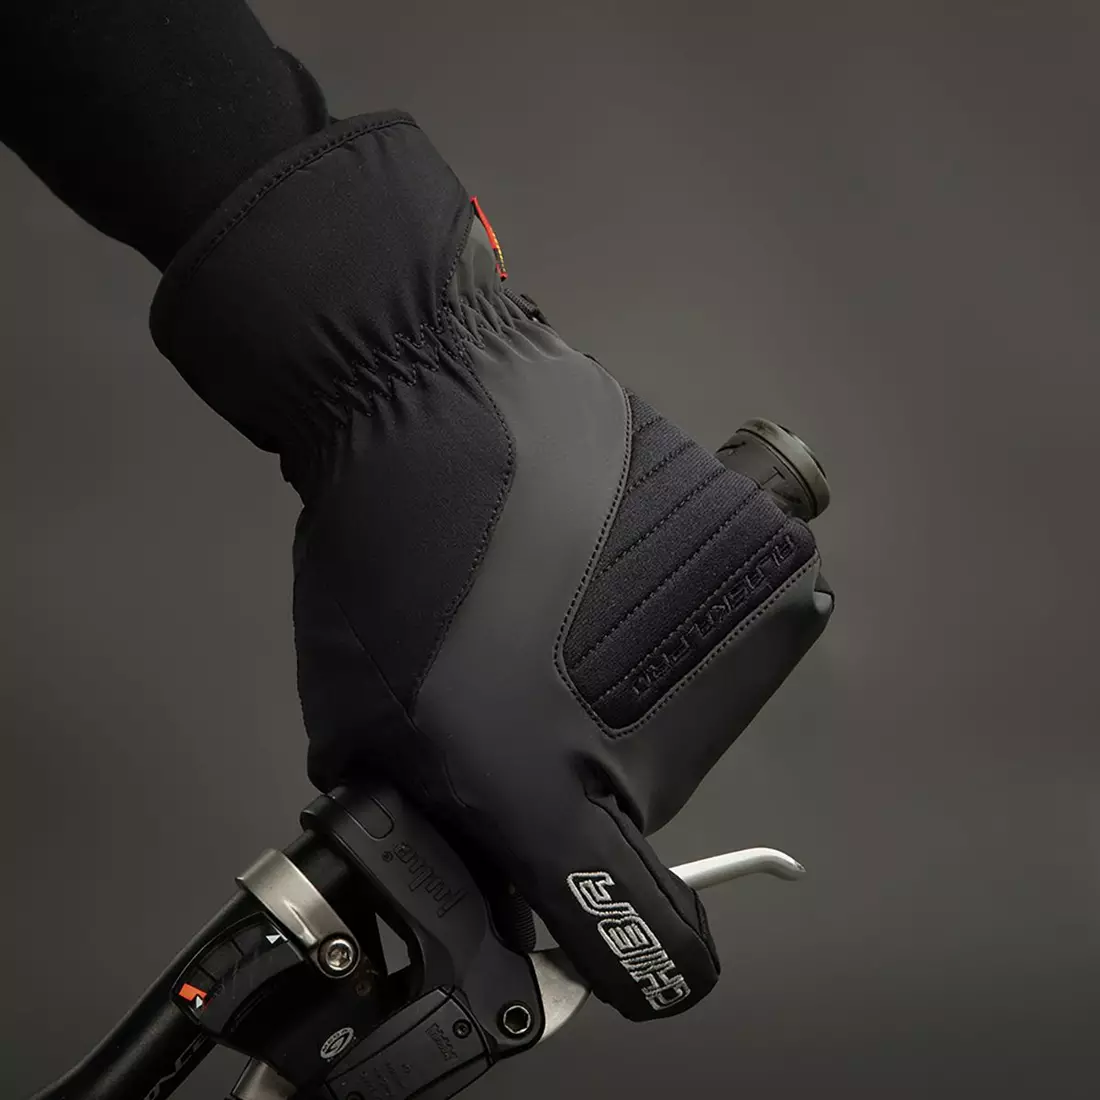 CHIBA ALASKA PRO Winter cycling gloves, black 3110020 